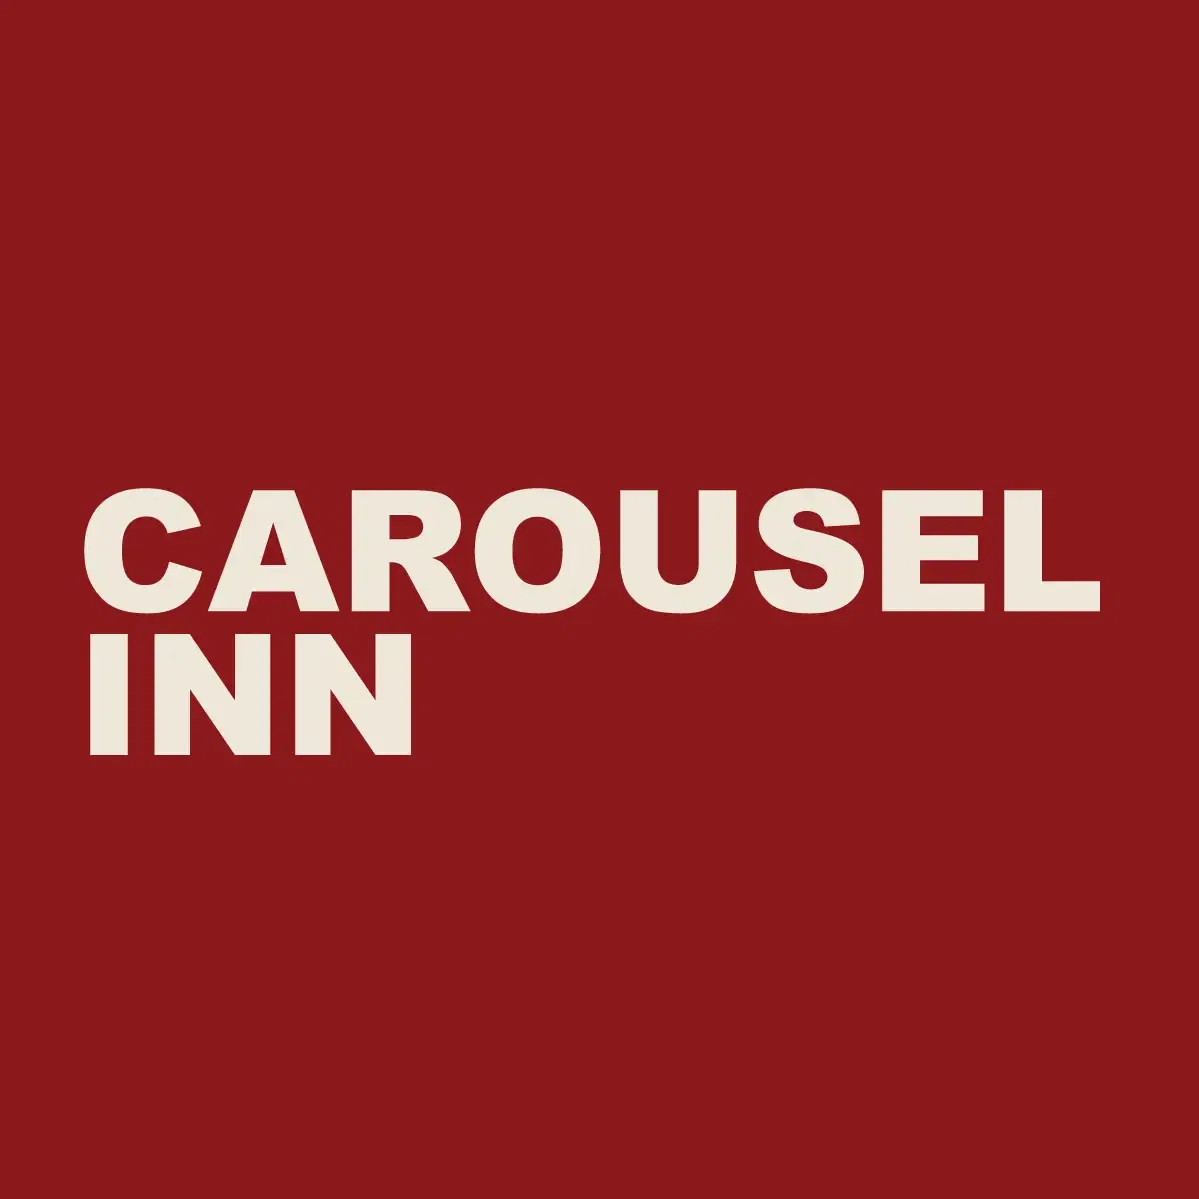 Carousel Inn